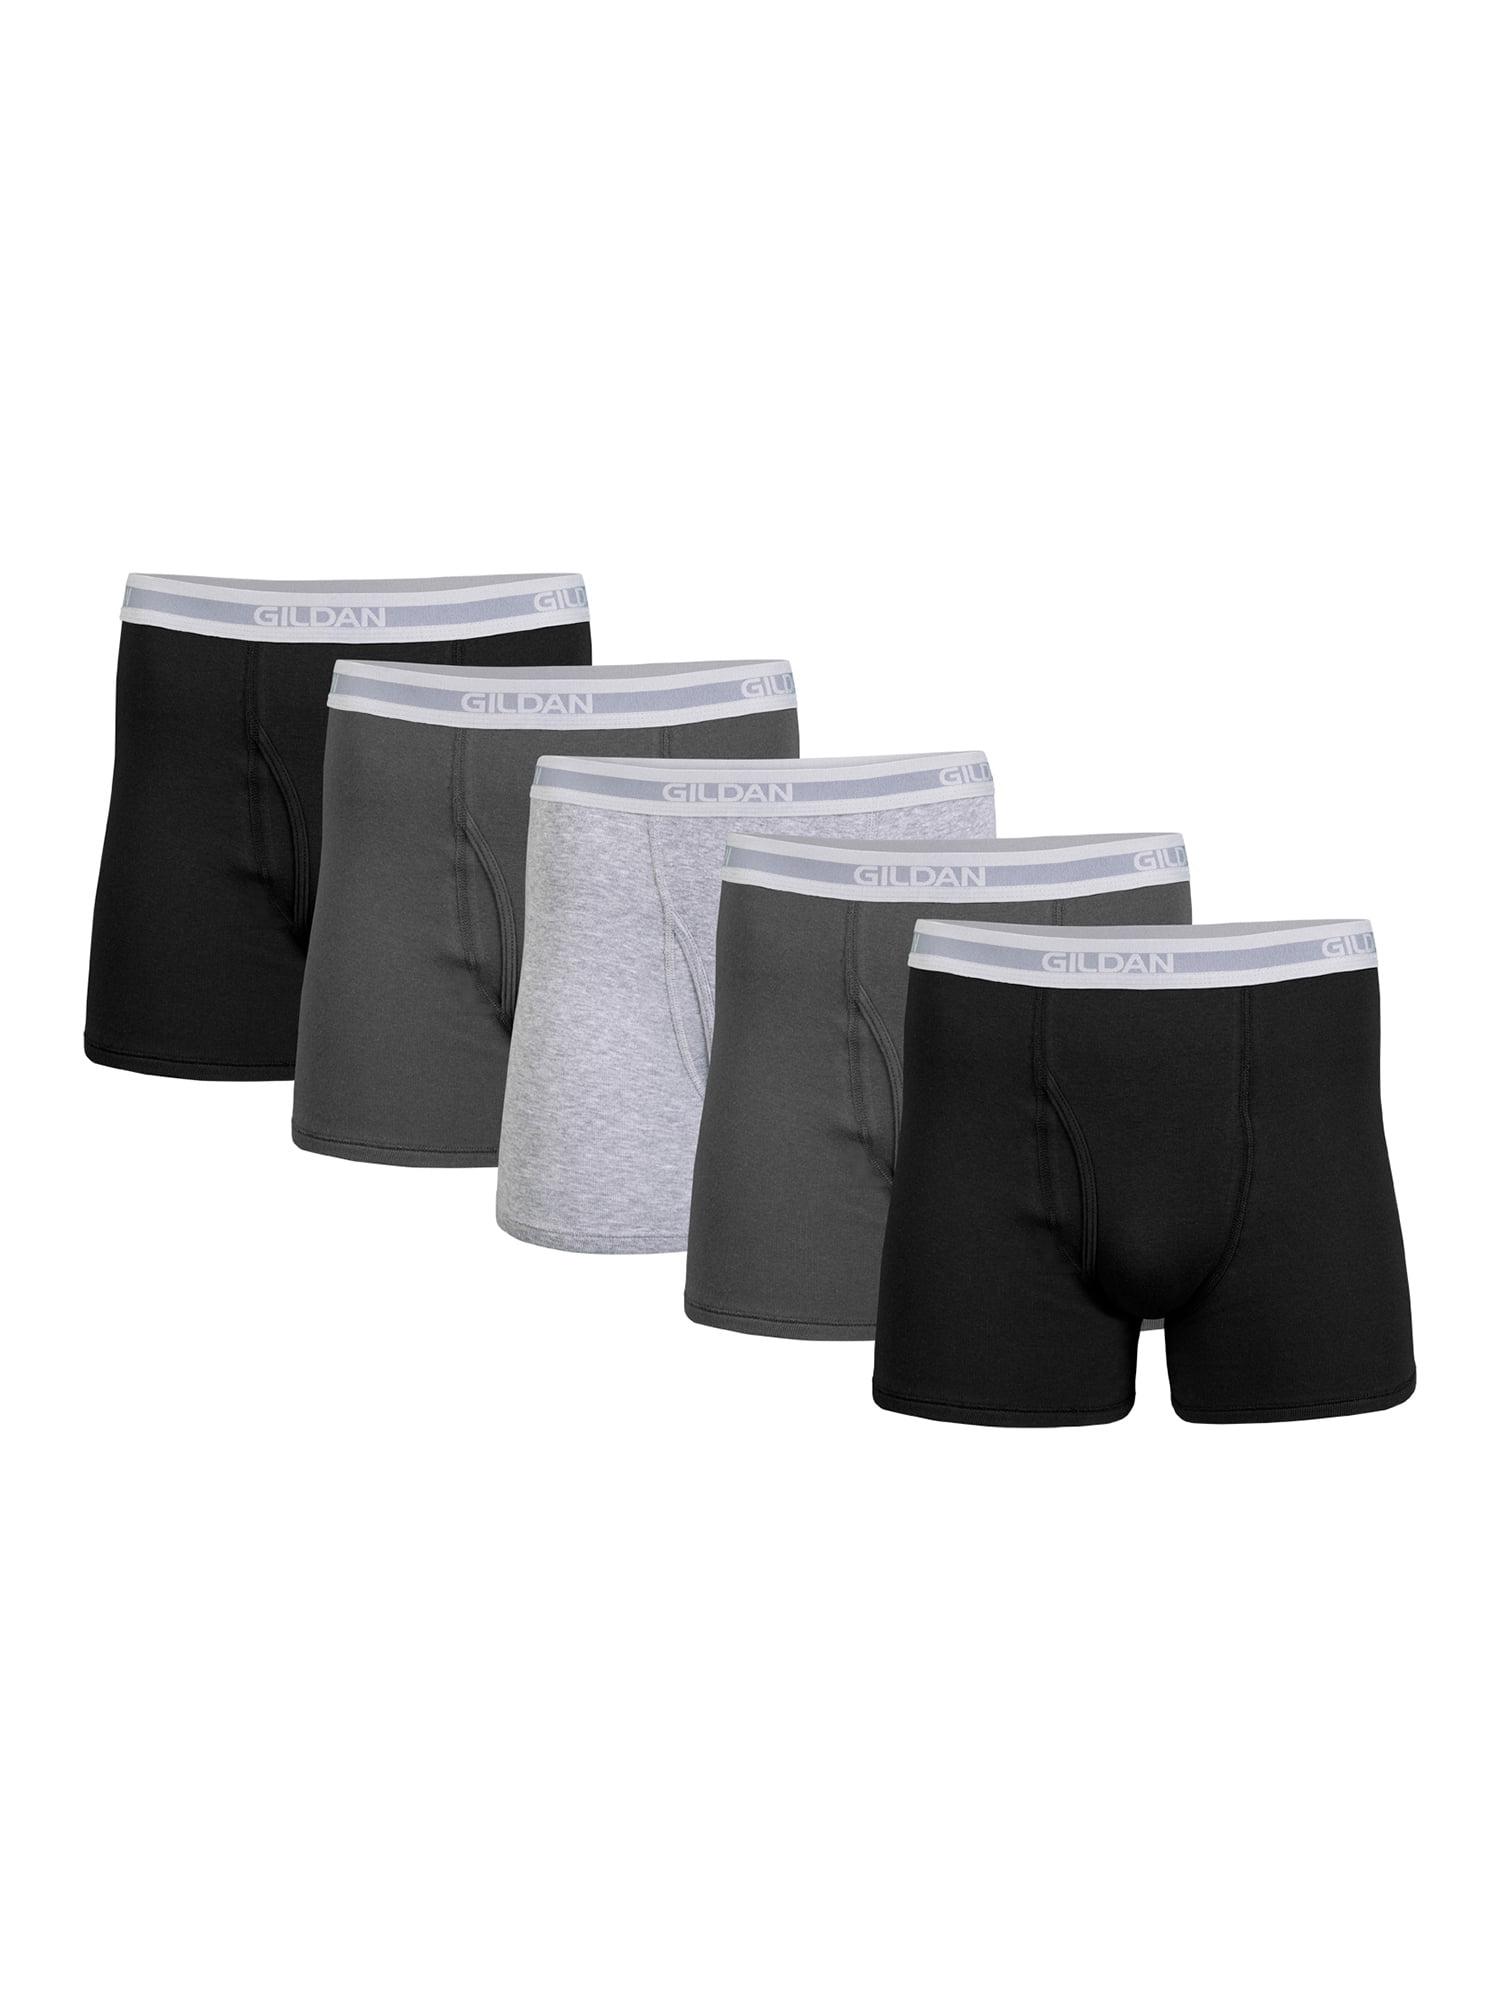 Gildan Adult Men's Regular Leg Boxer Briefs, 5-Pack, Sizes S-2XL, 6 Inseam  